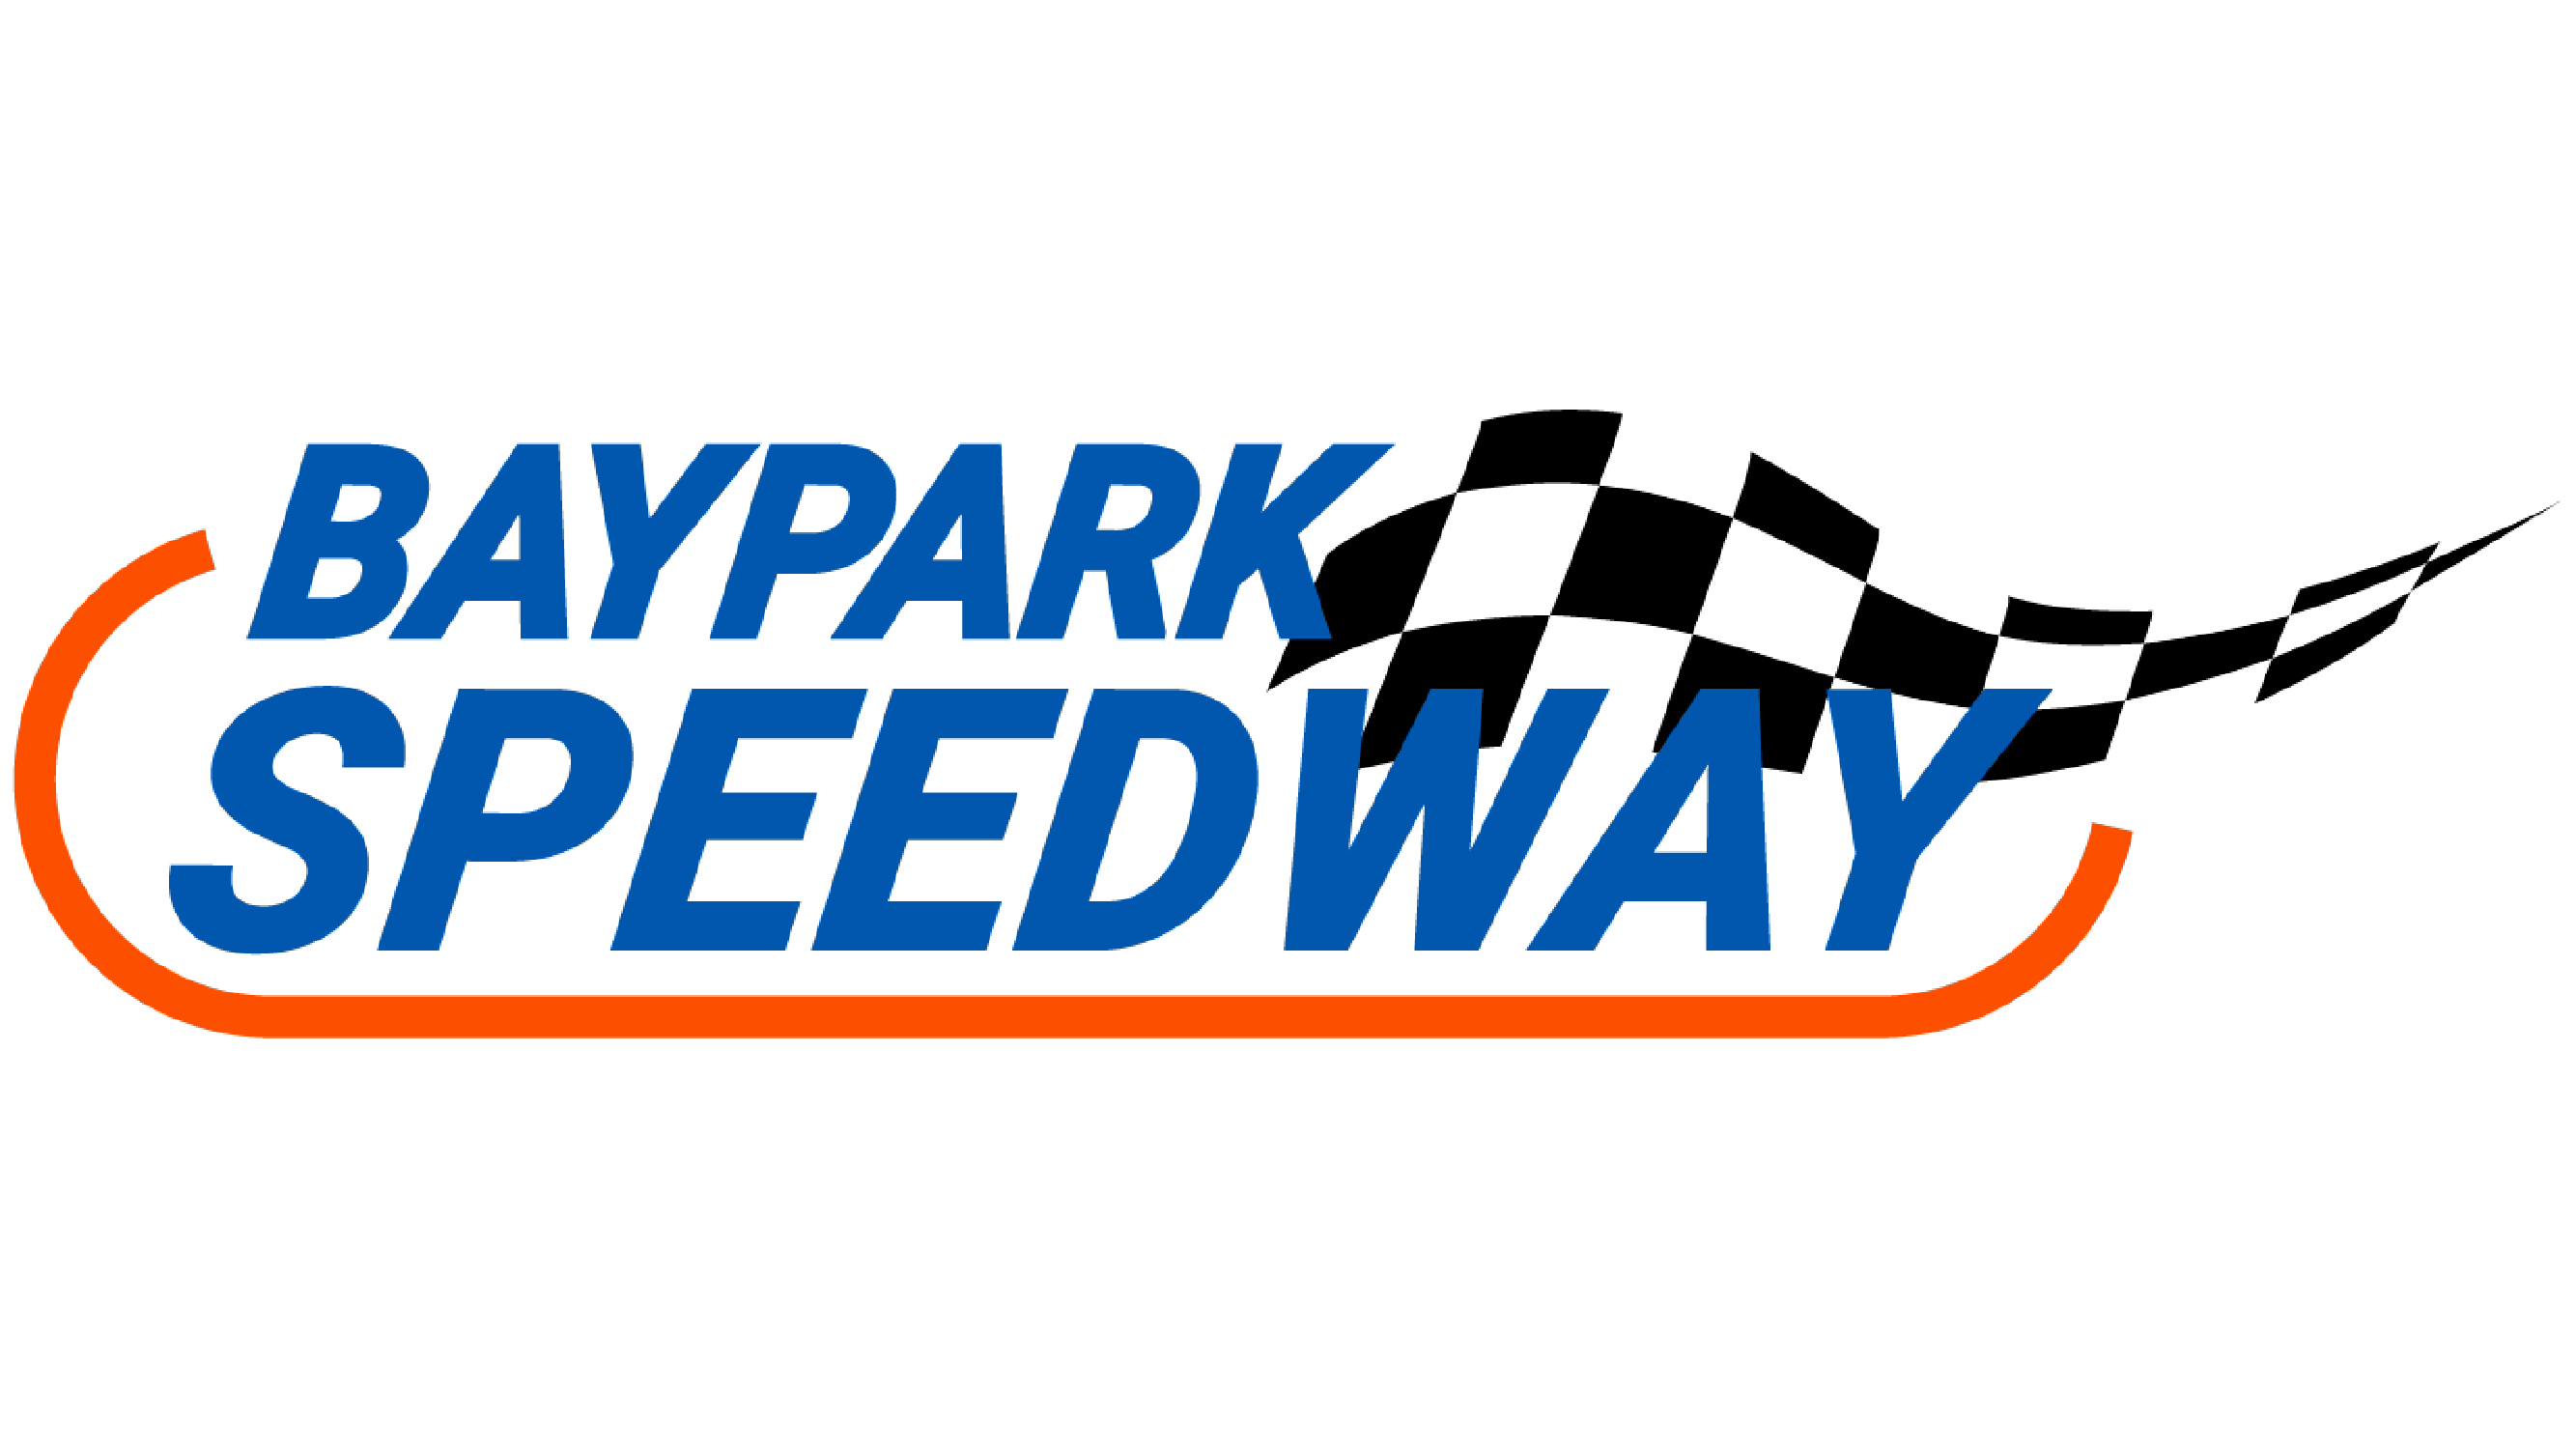 Bay Park Speedway logo